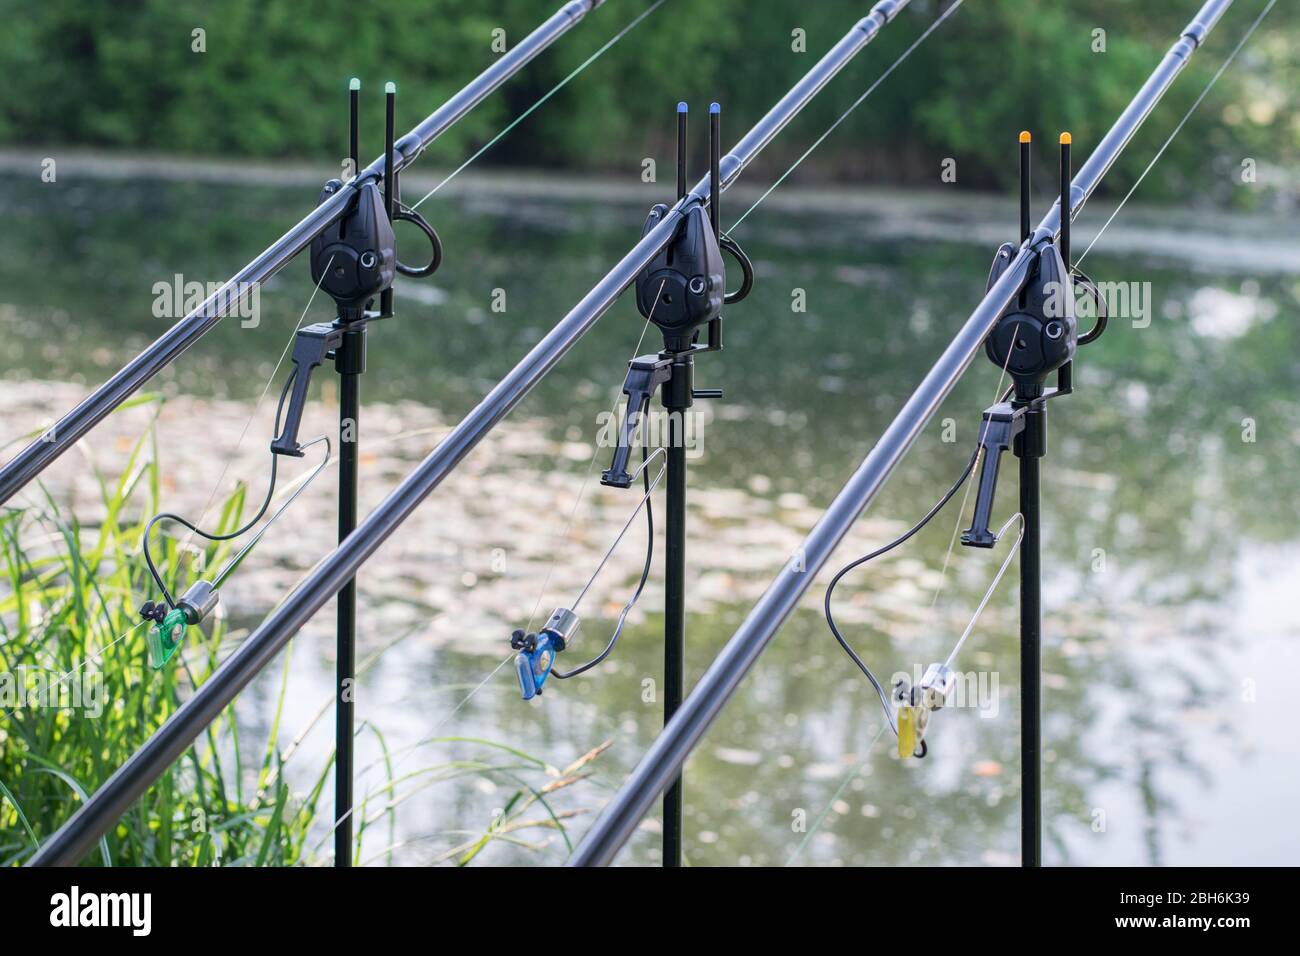 Spring Feeder for Carp Fishing Stock Photo - Image of angler, pond